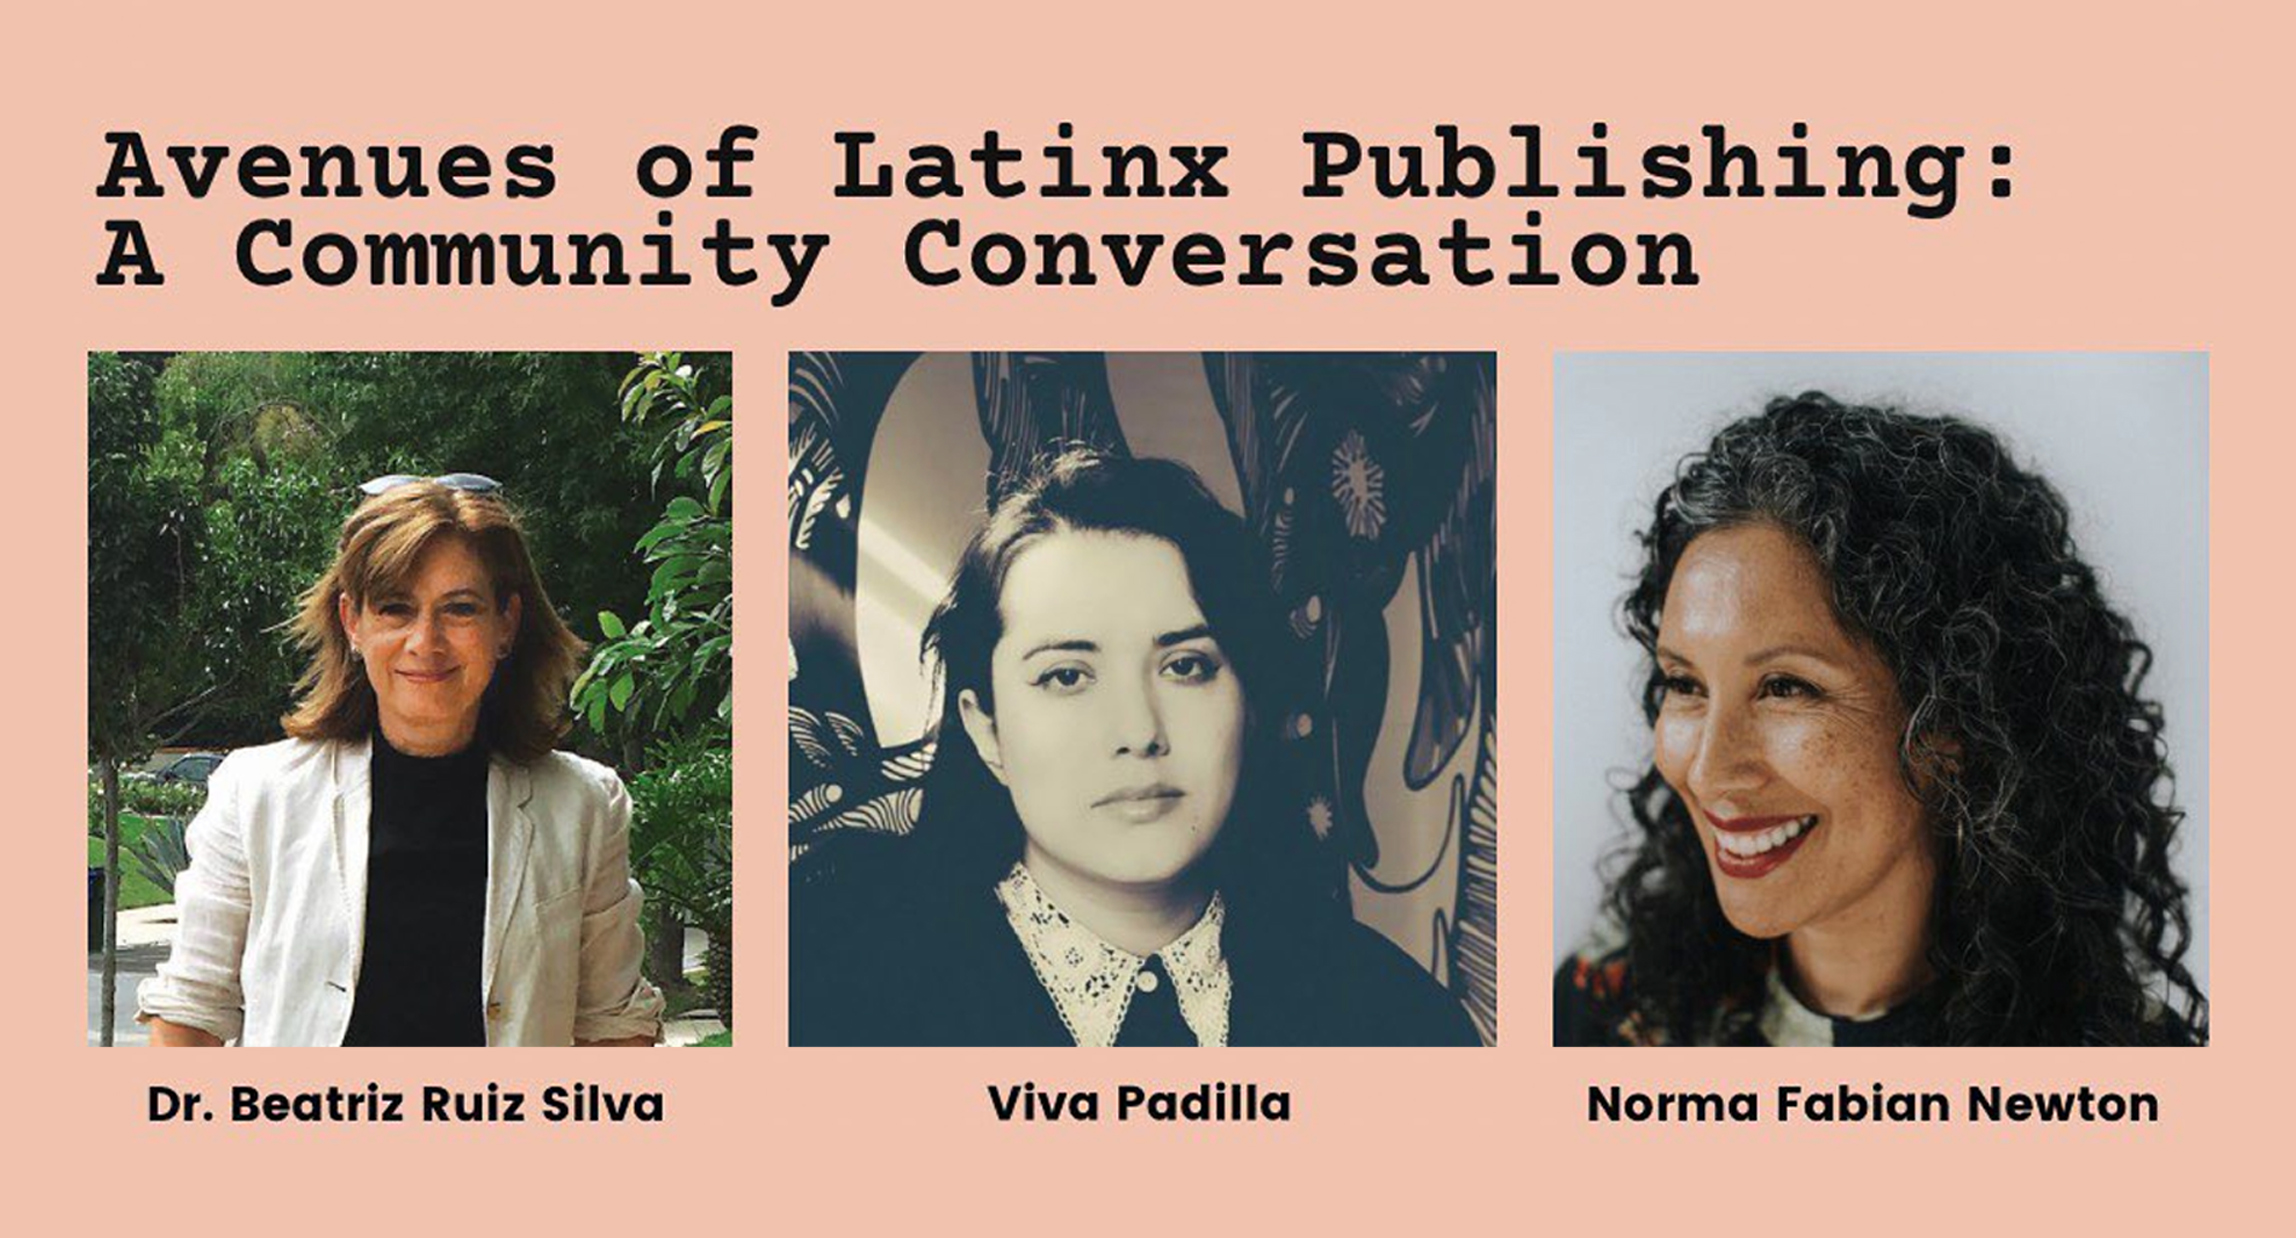 Avenues of Latinx Publishing